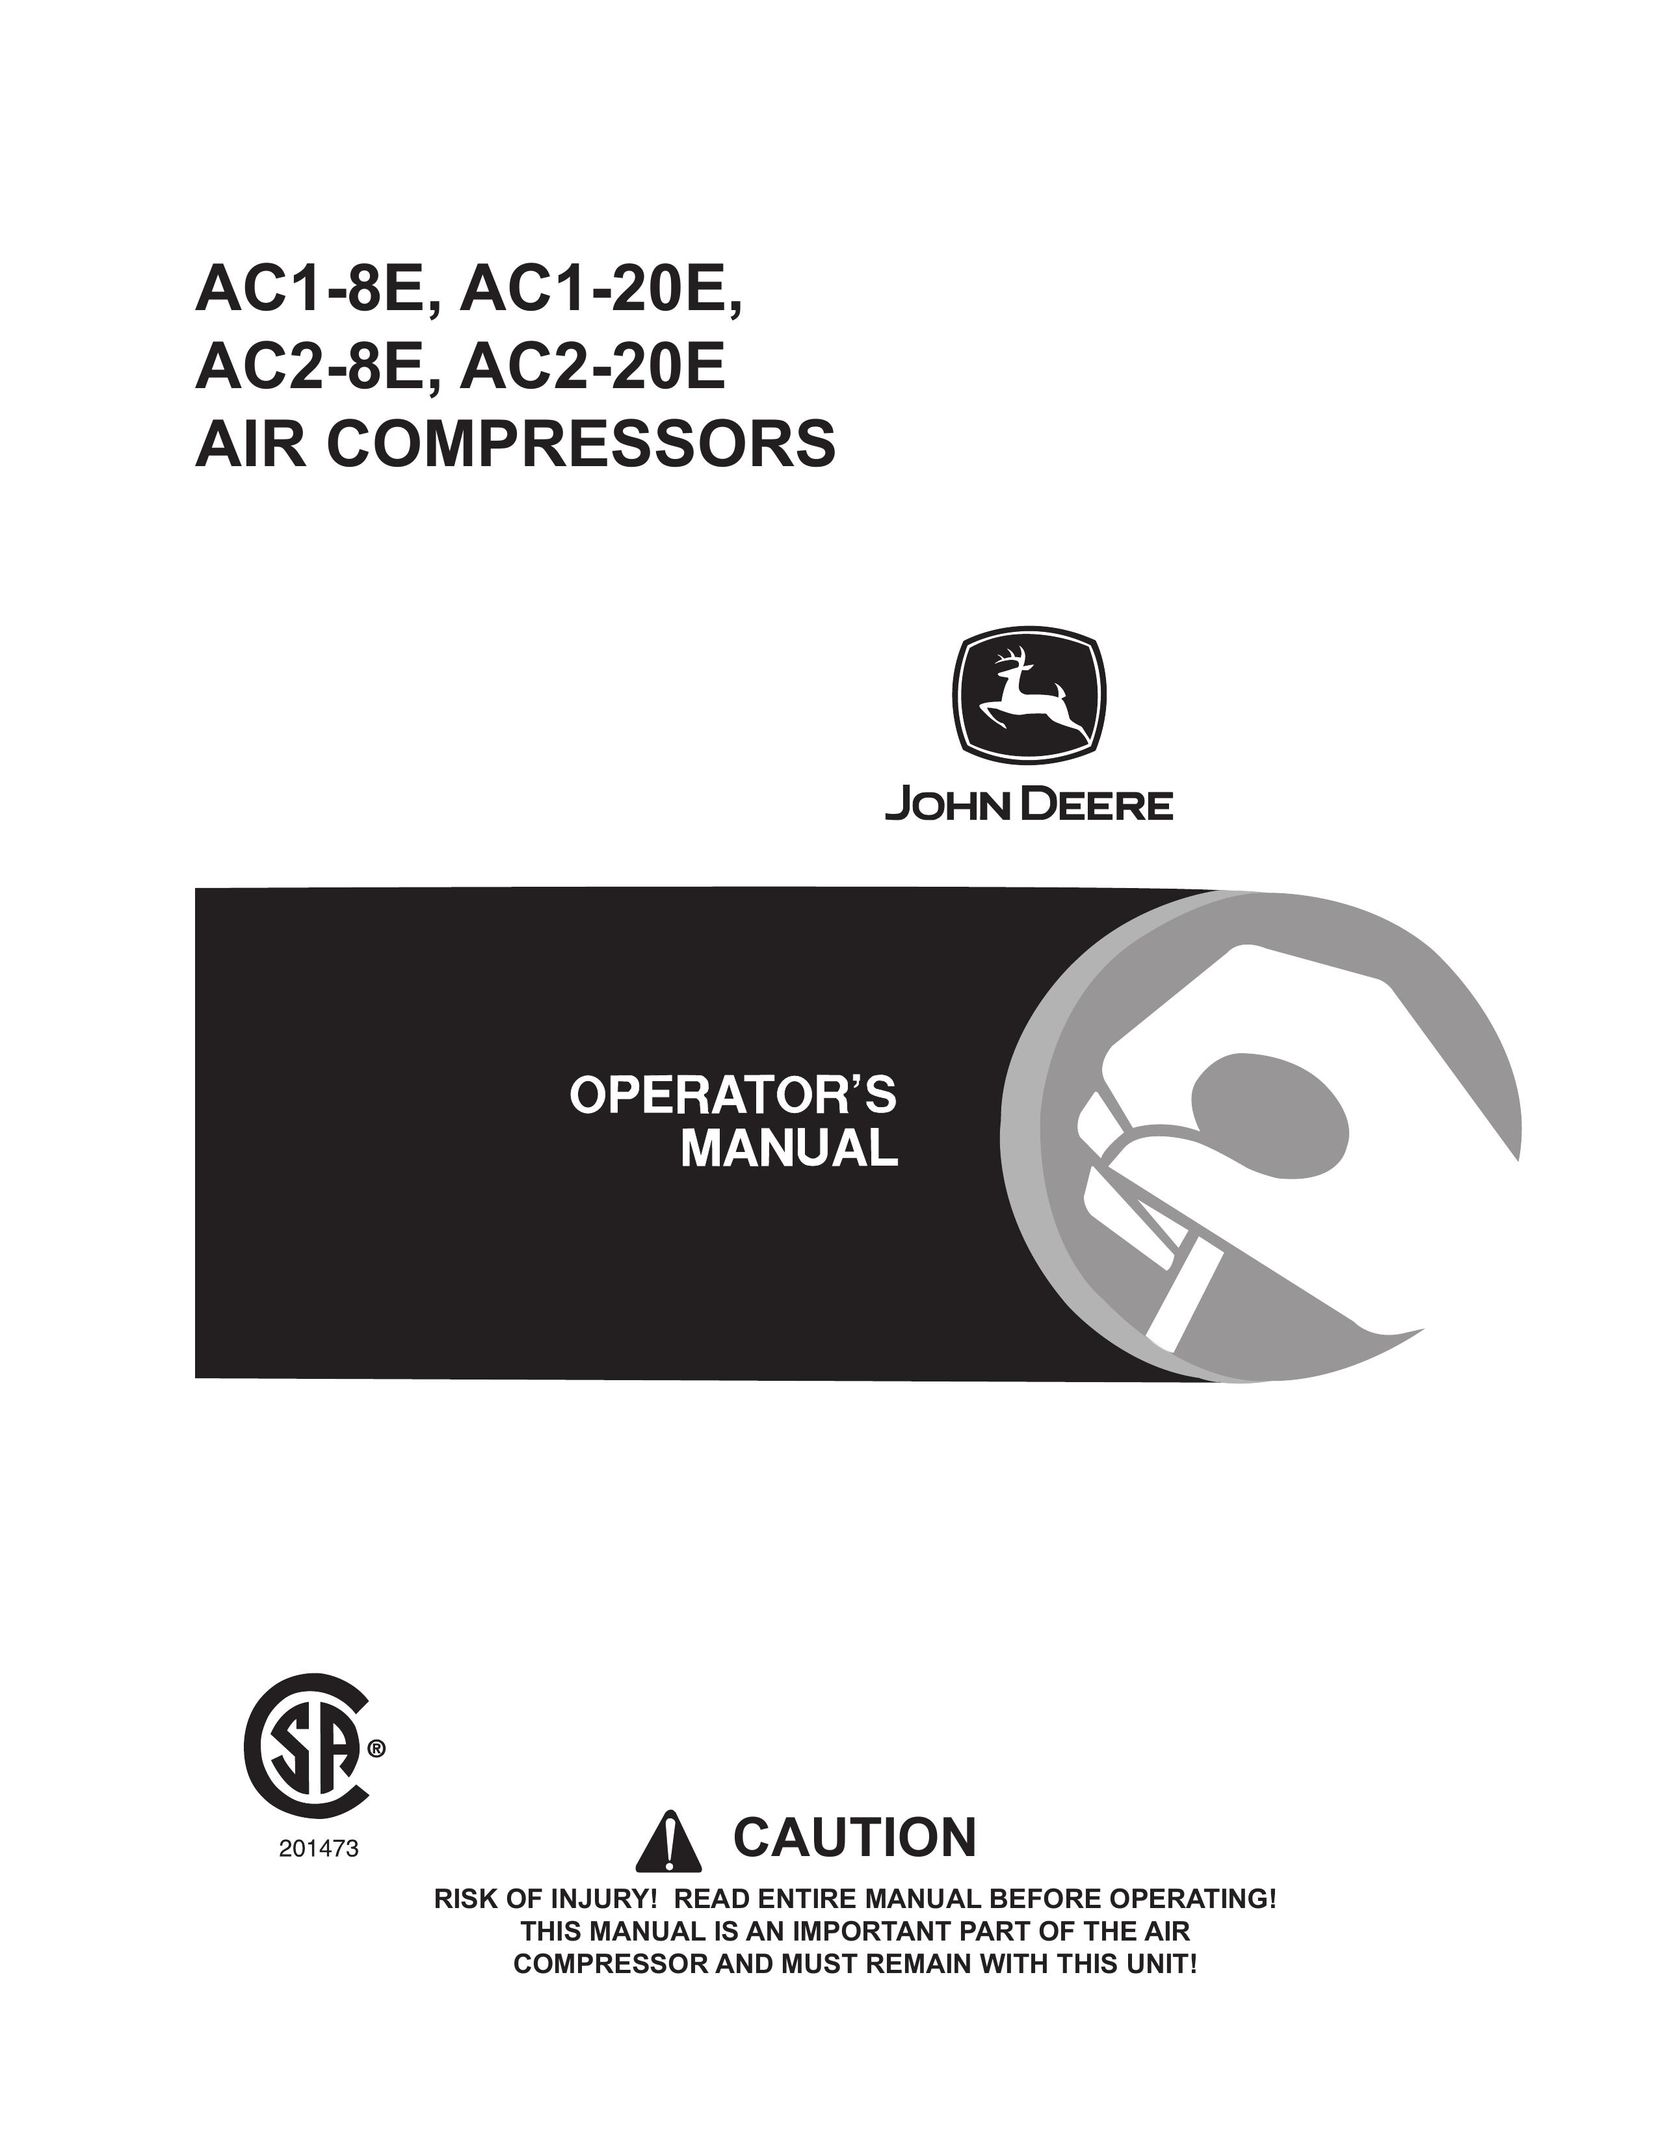 John Deere AC2-8E Air Compressor User Manual